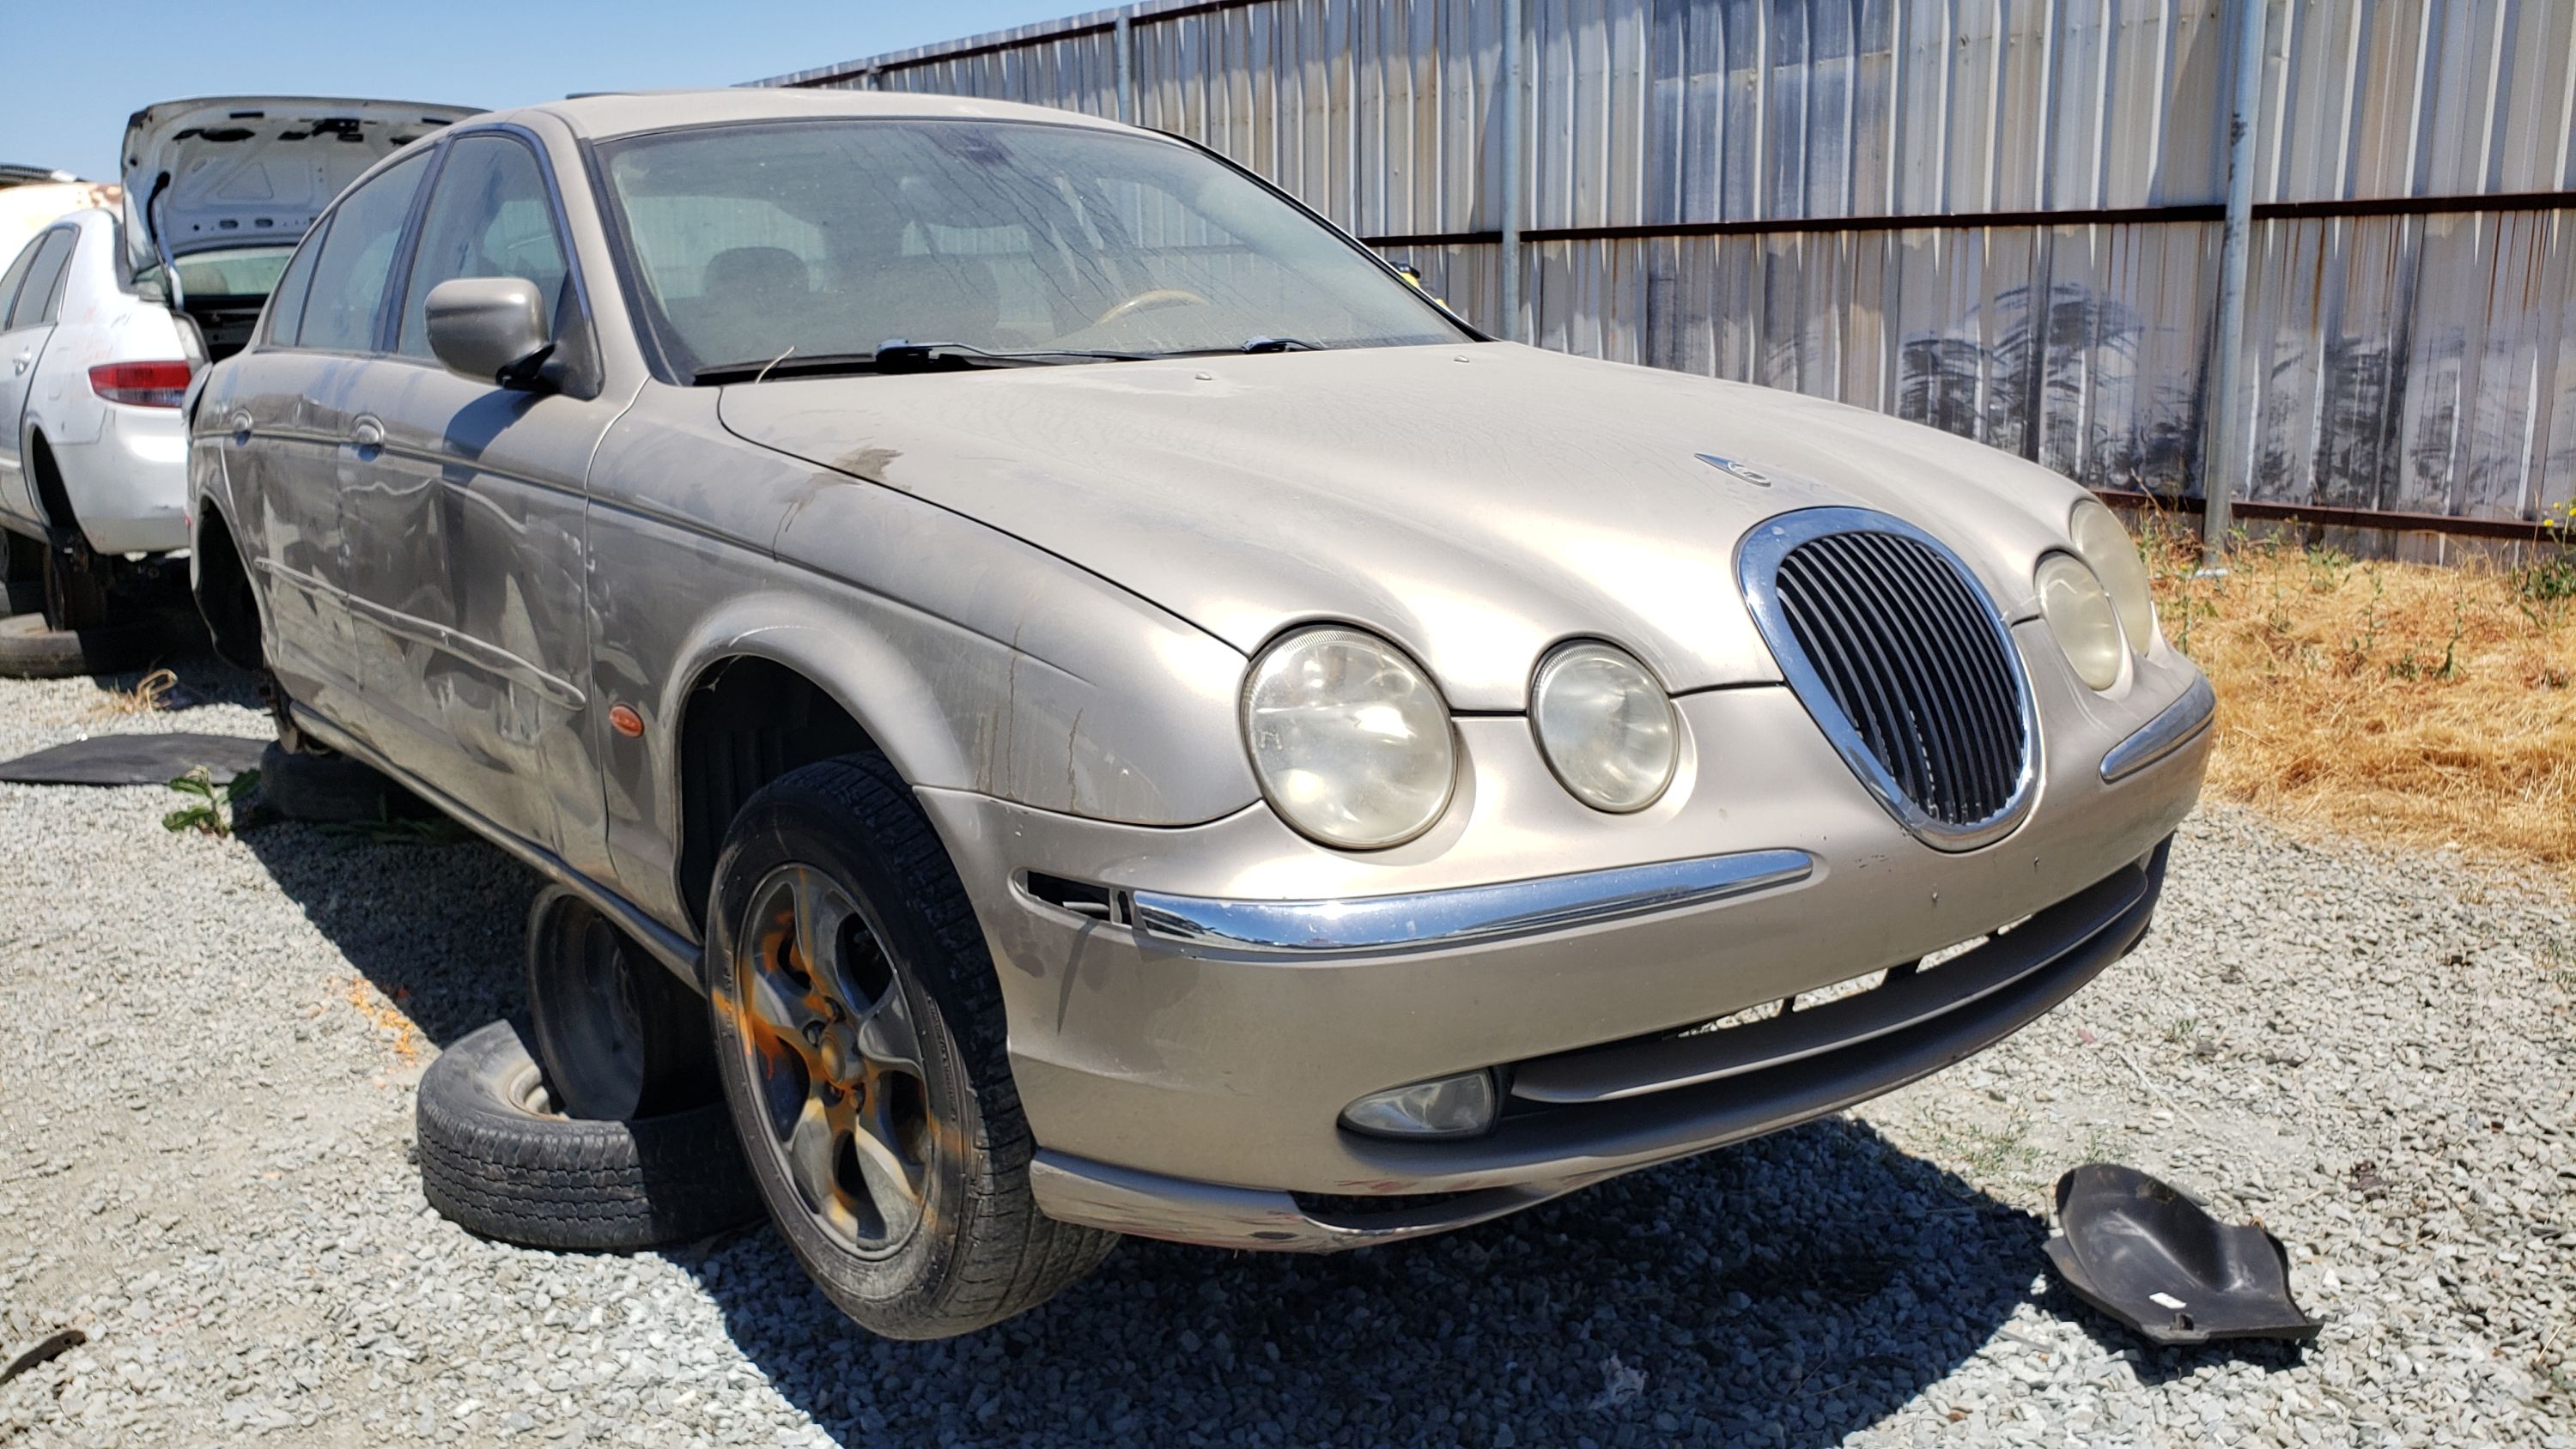 Jaguar S-TYPE Sedan: Models, Generations and Details | Autoblog